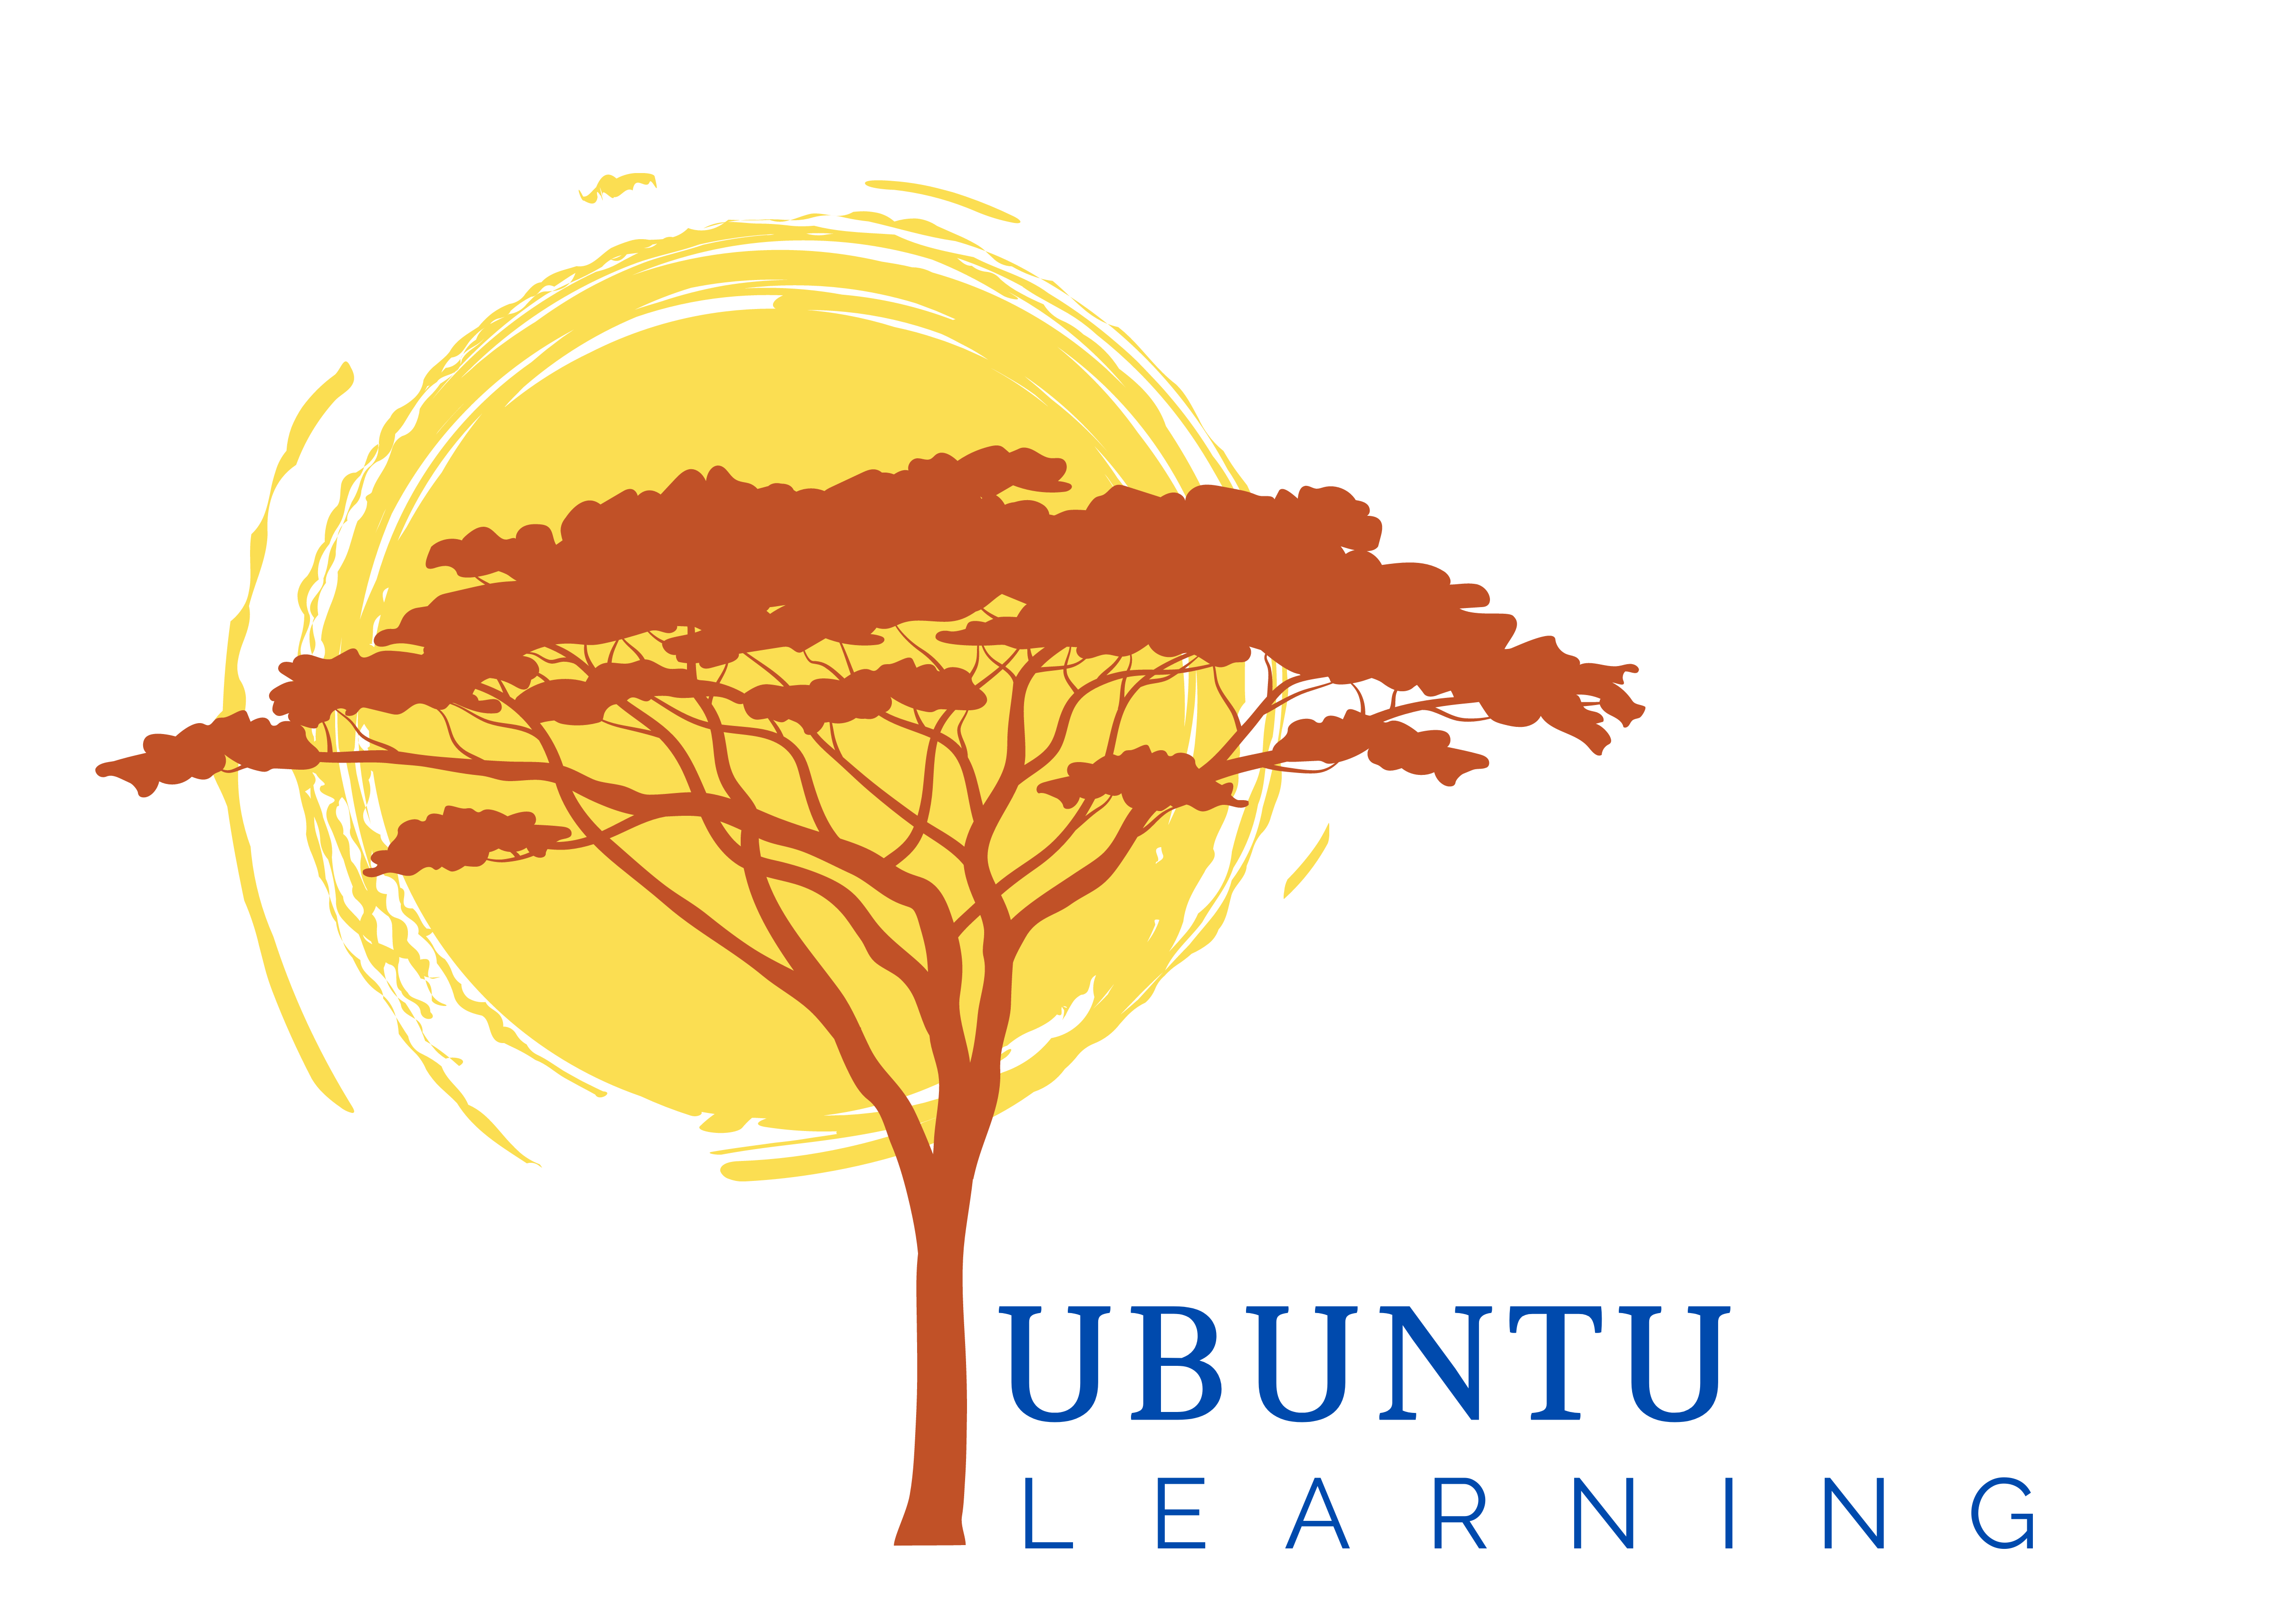 Ubuntu Learning